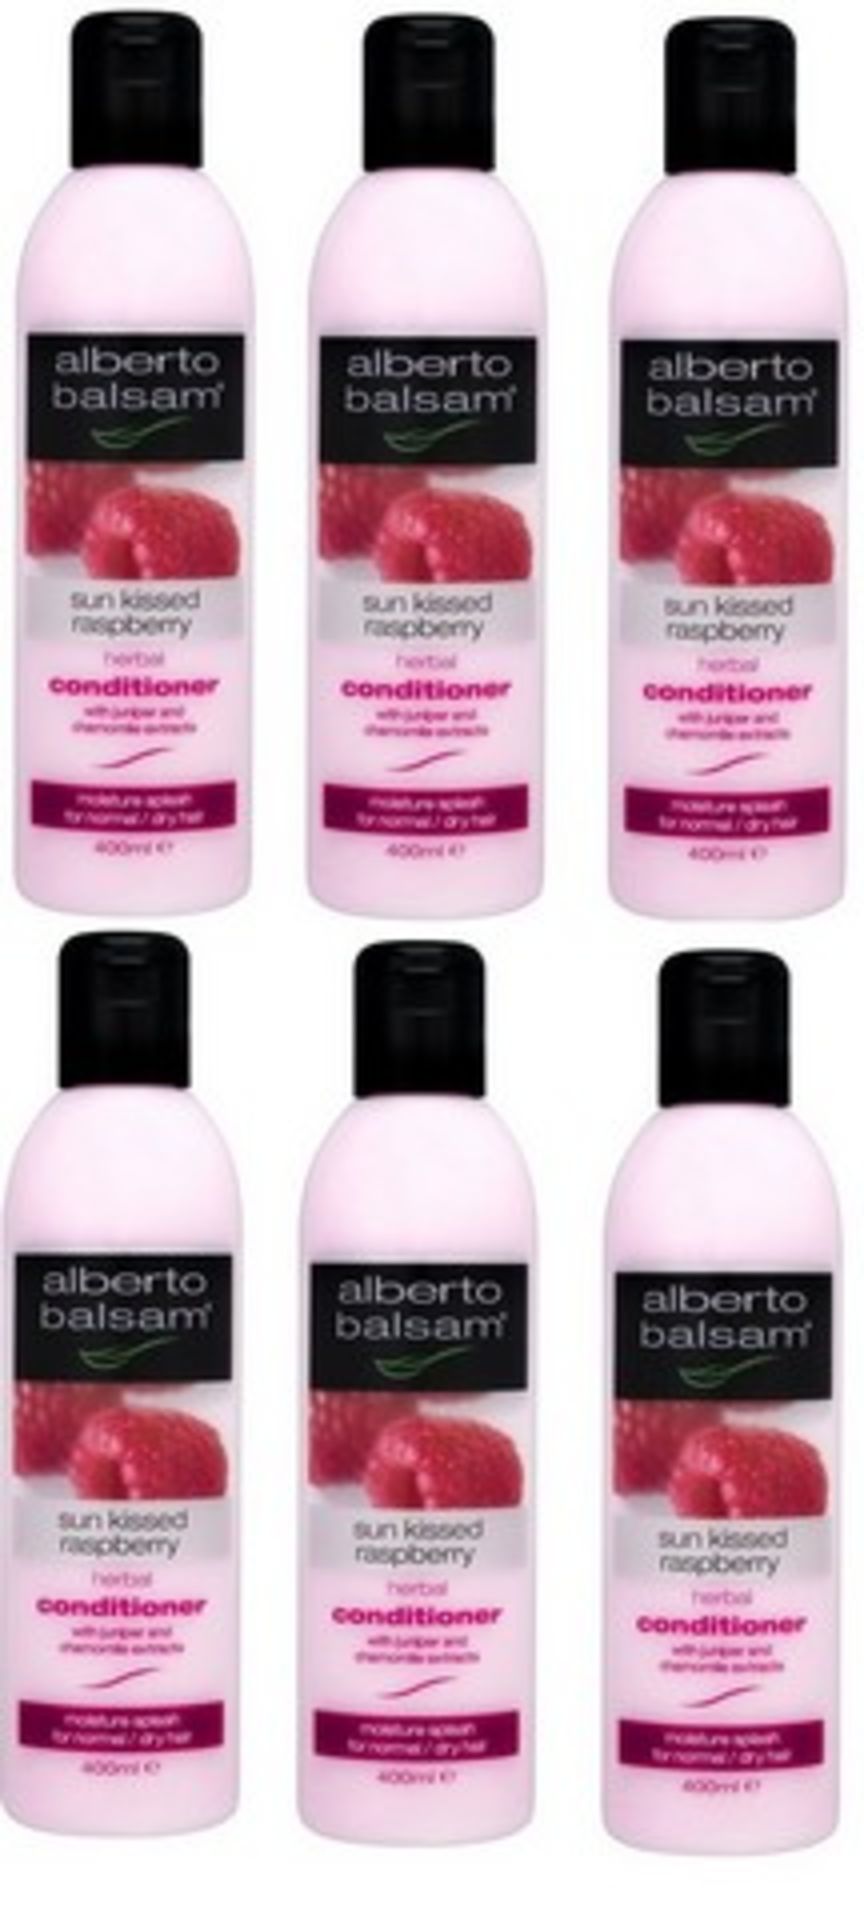 V Brand New A Lot Of Six 400ml Alberto Balsam Sun Kissed Raspberry Conditioner